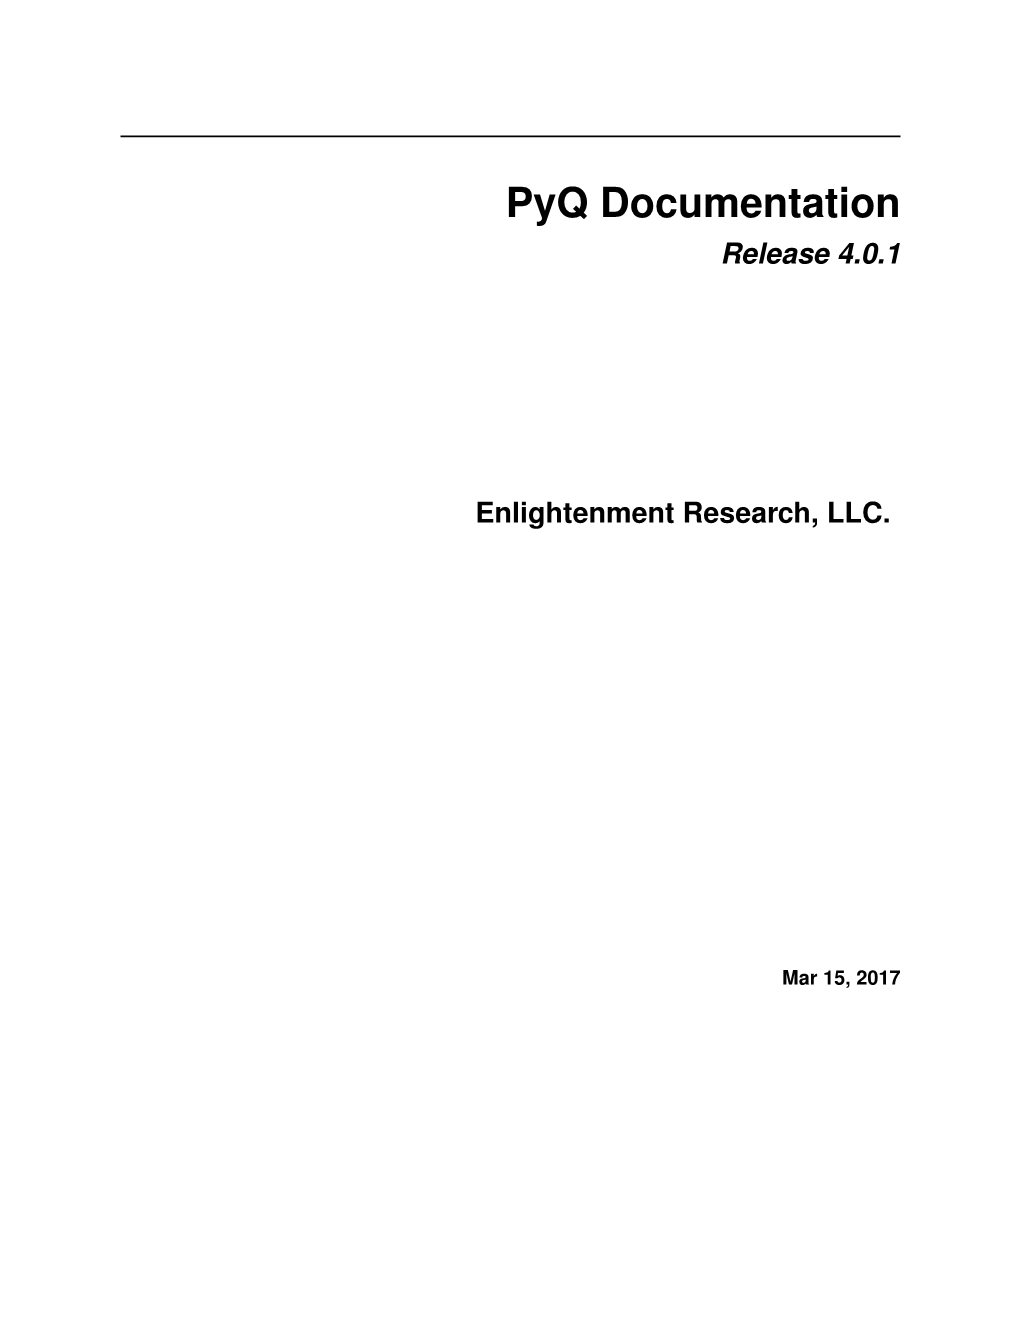 Pyq Documentation Release 4.0.1